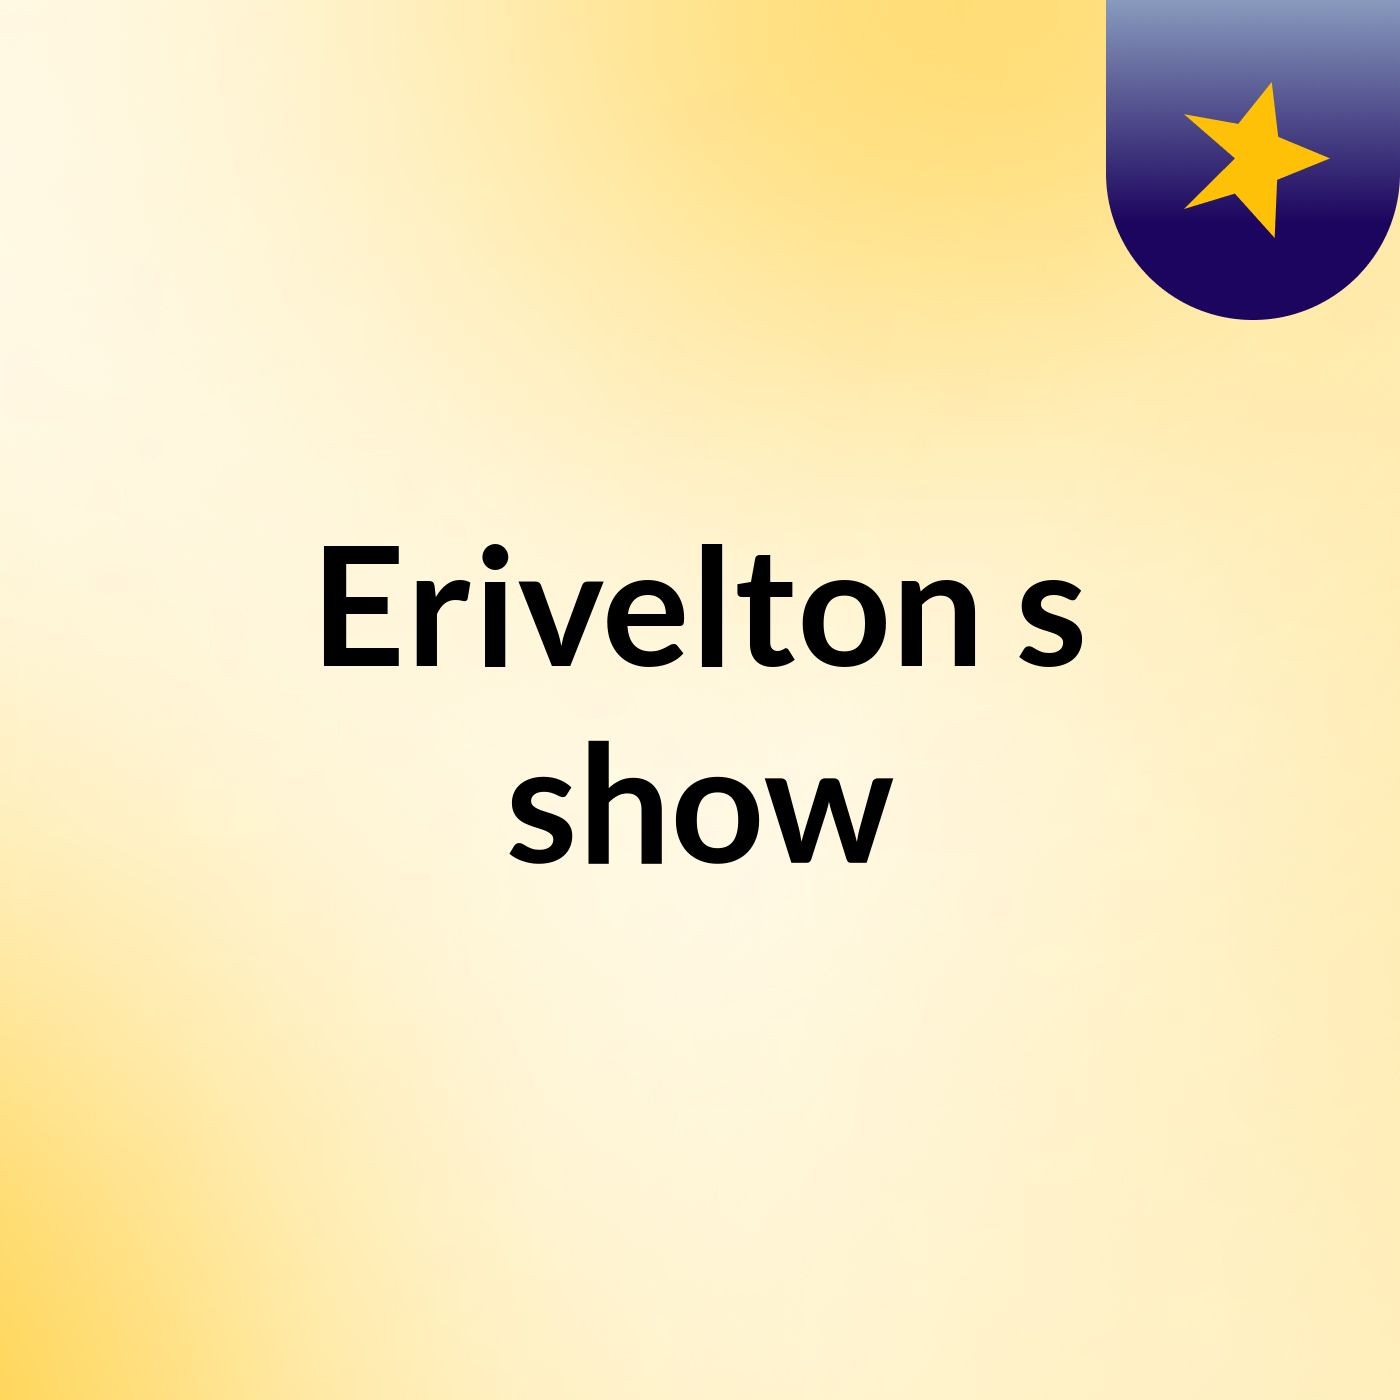 Erivelton's show